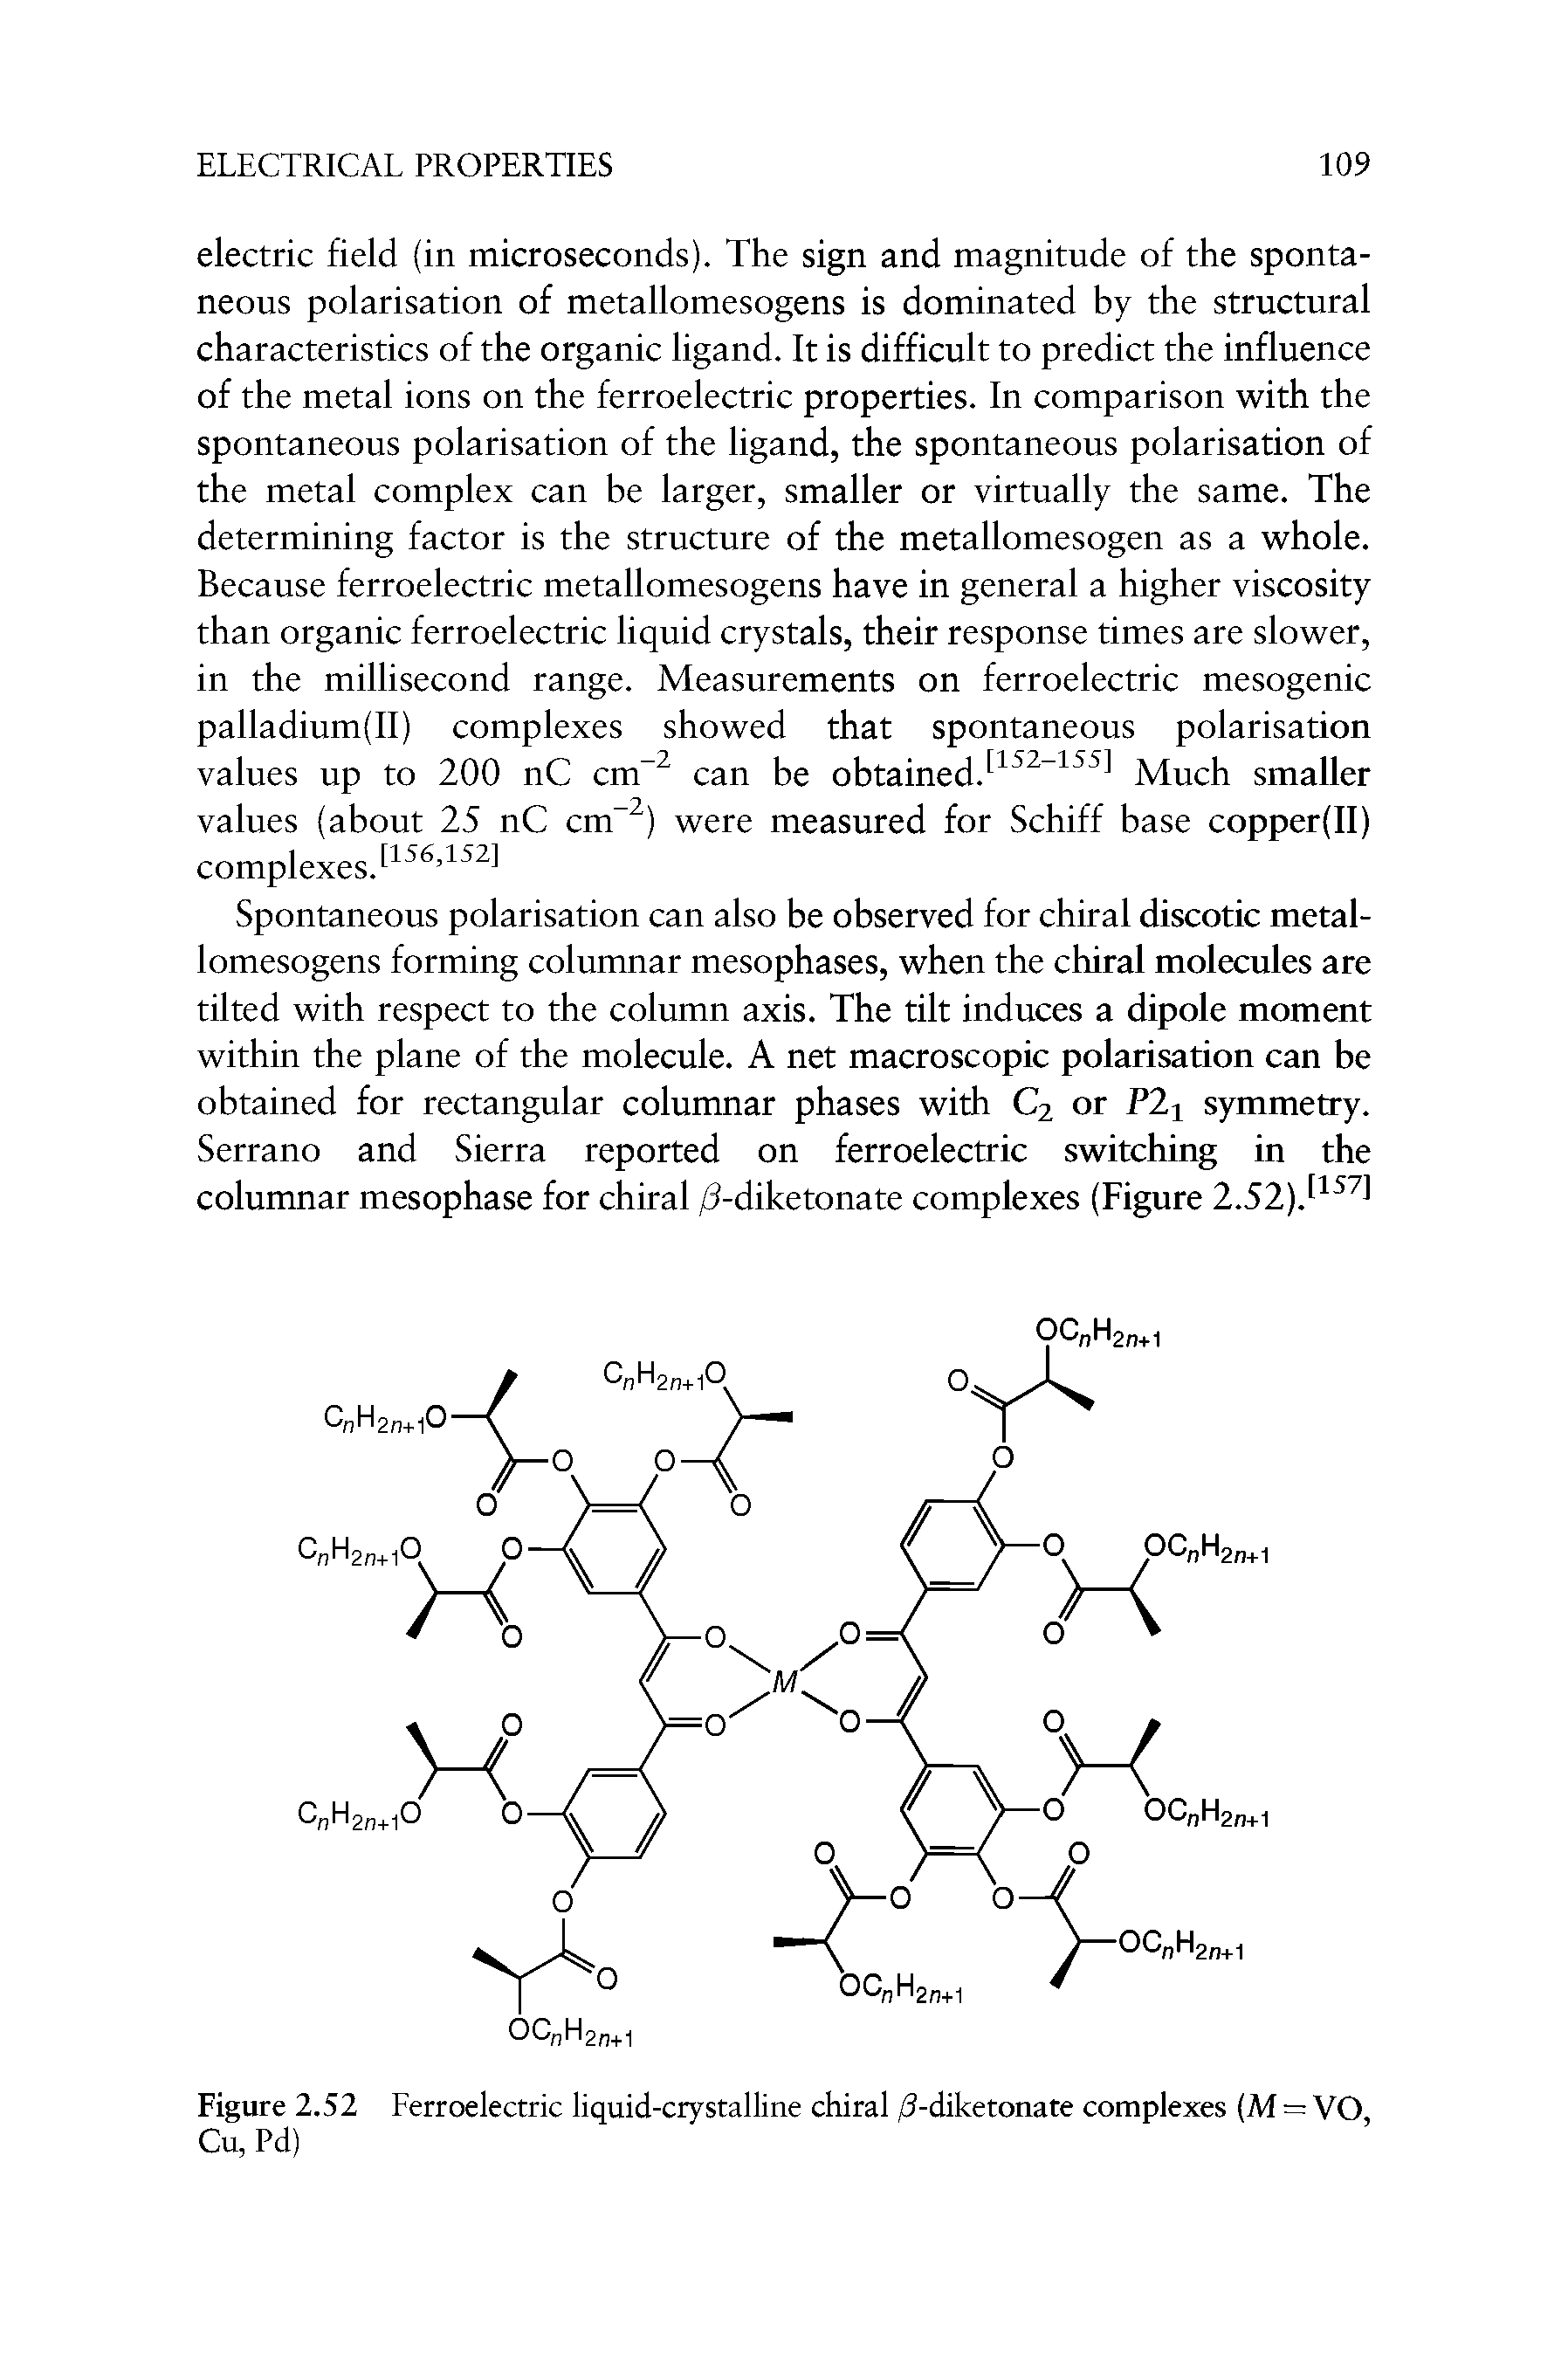 Figure 2.52 Ferroelectric liquid-crystalline chiral /3-diketonate complexes (M = VO,...